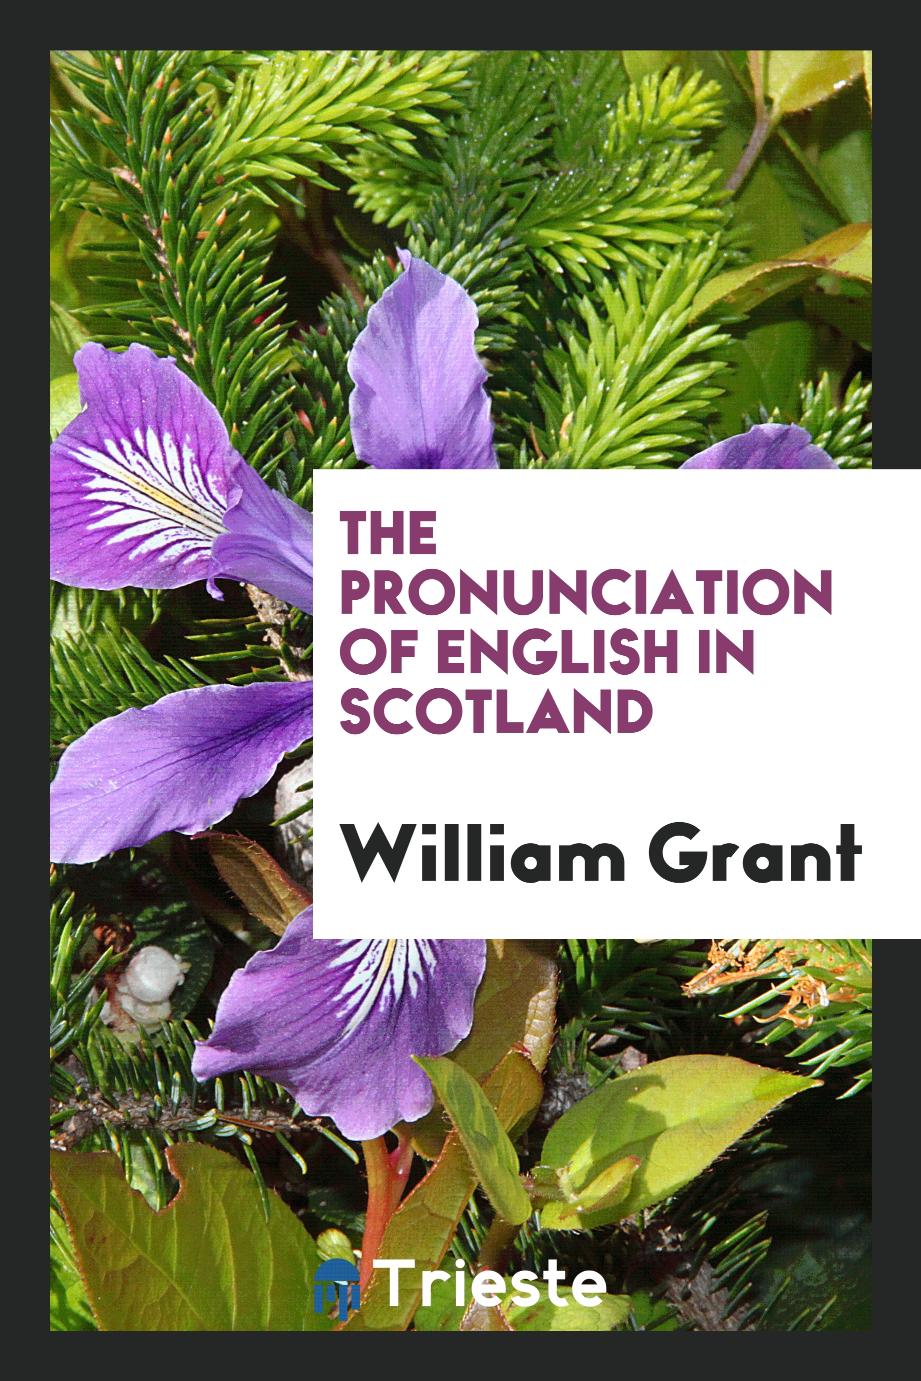 The pronunciation of English in Scotland